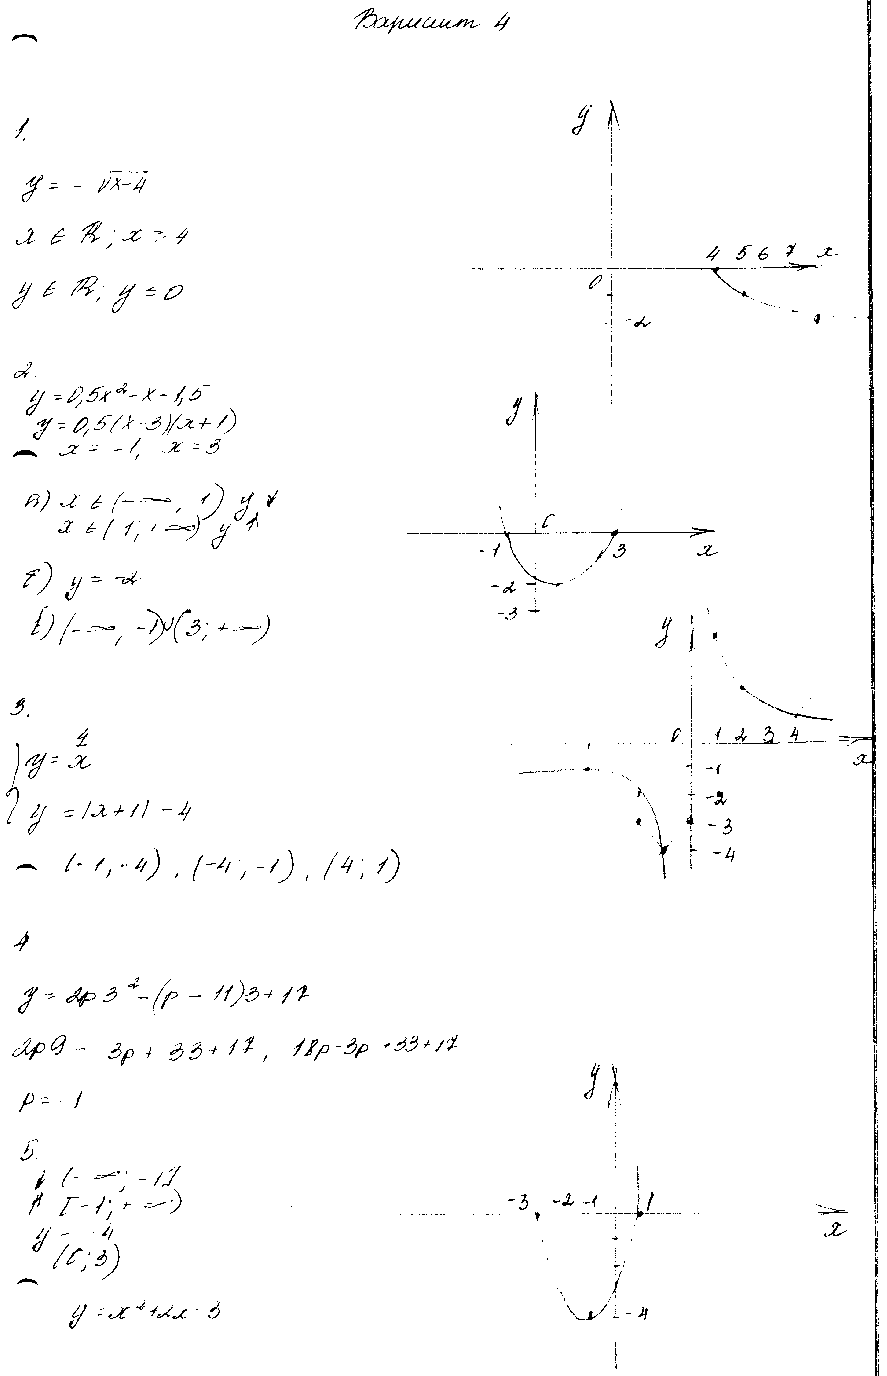 ГДЗ Алгебра 8 класс - Вариант 4